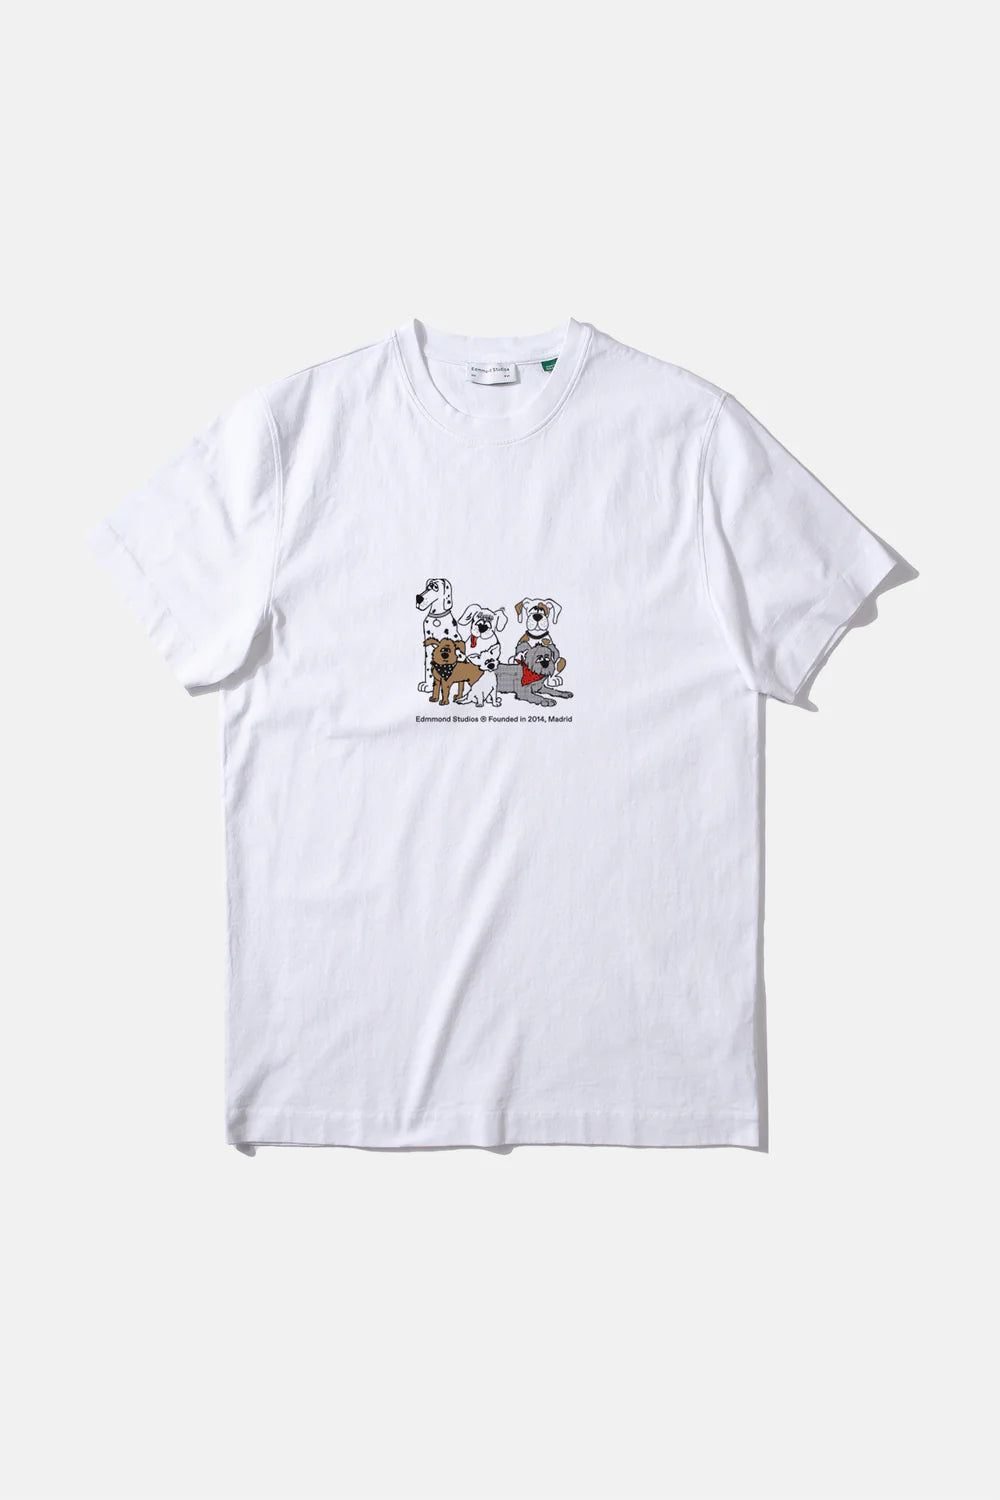 Edmmond Studios Dogs Bunch T-Shirt